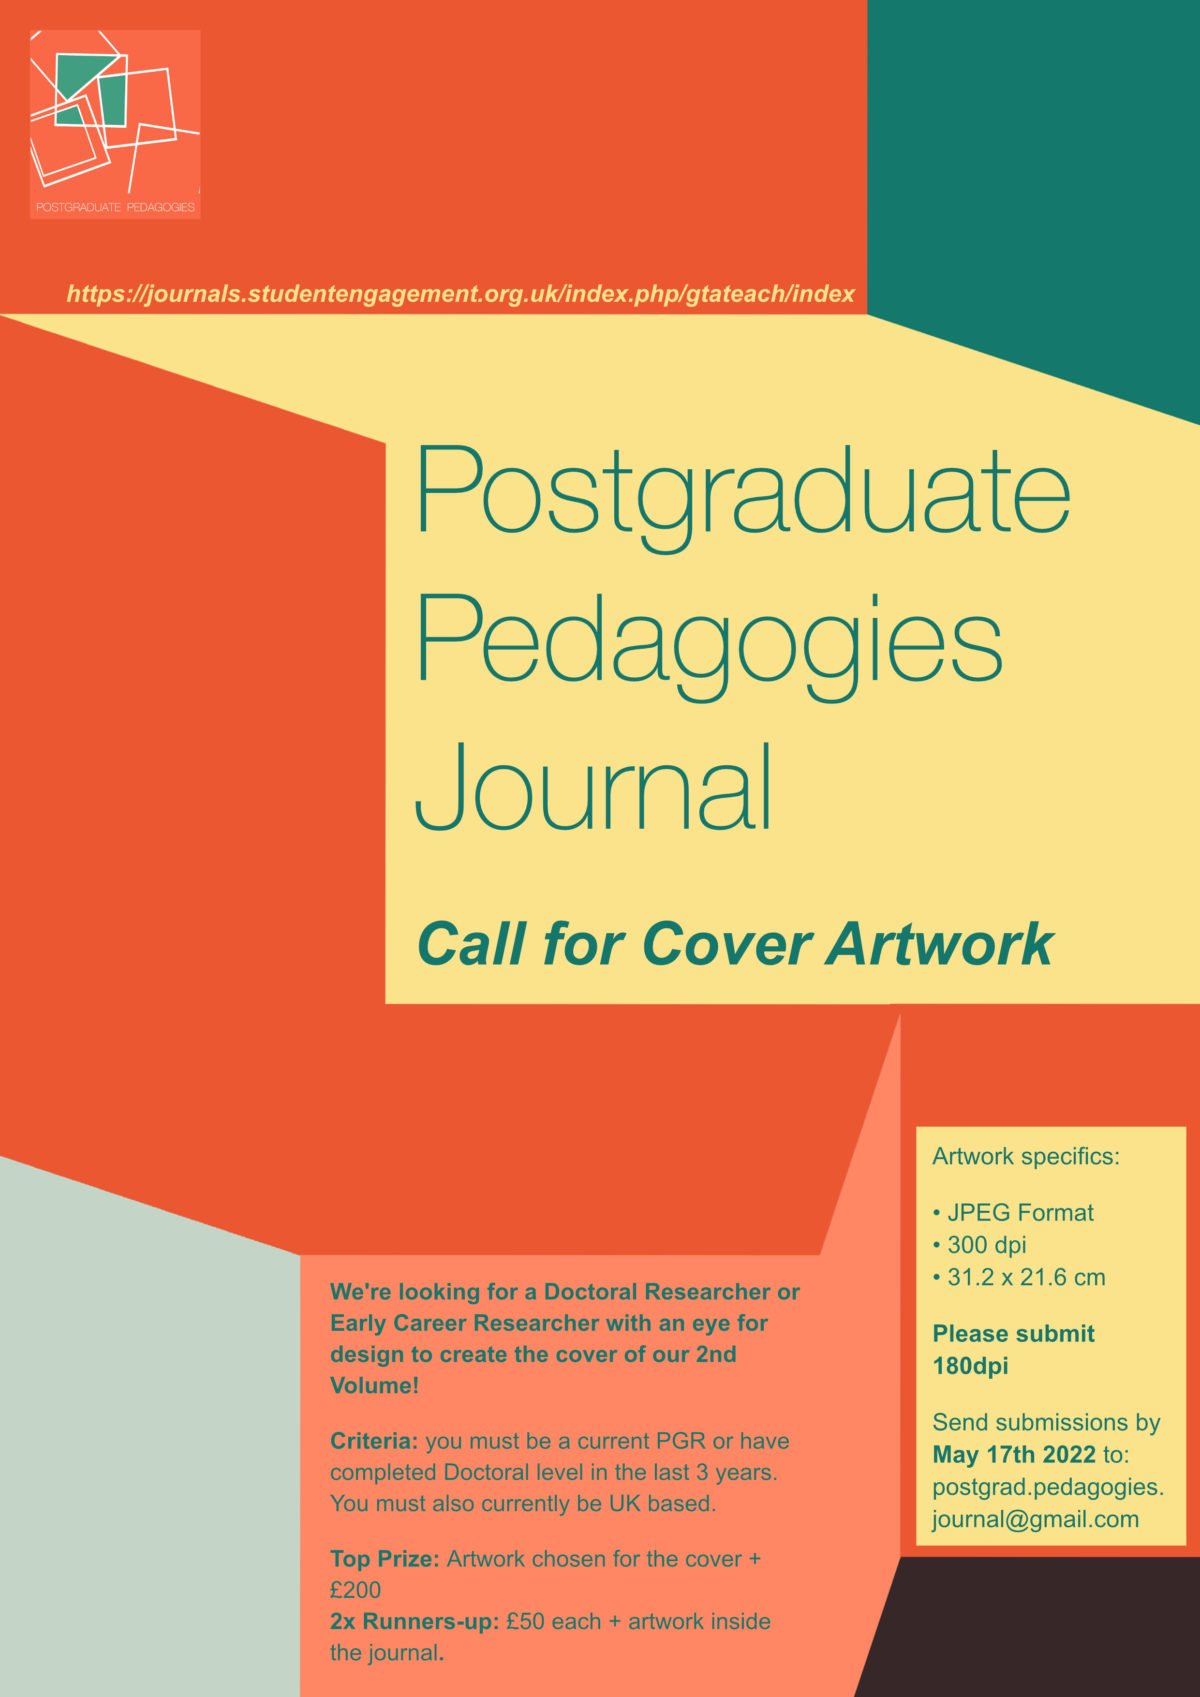 Postgraduate Pedagogies Journal: Doctoral Researcher Opportunity